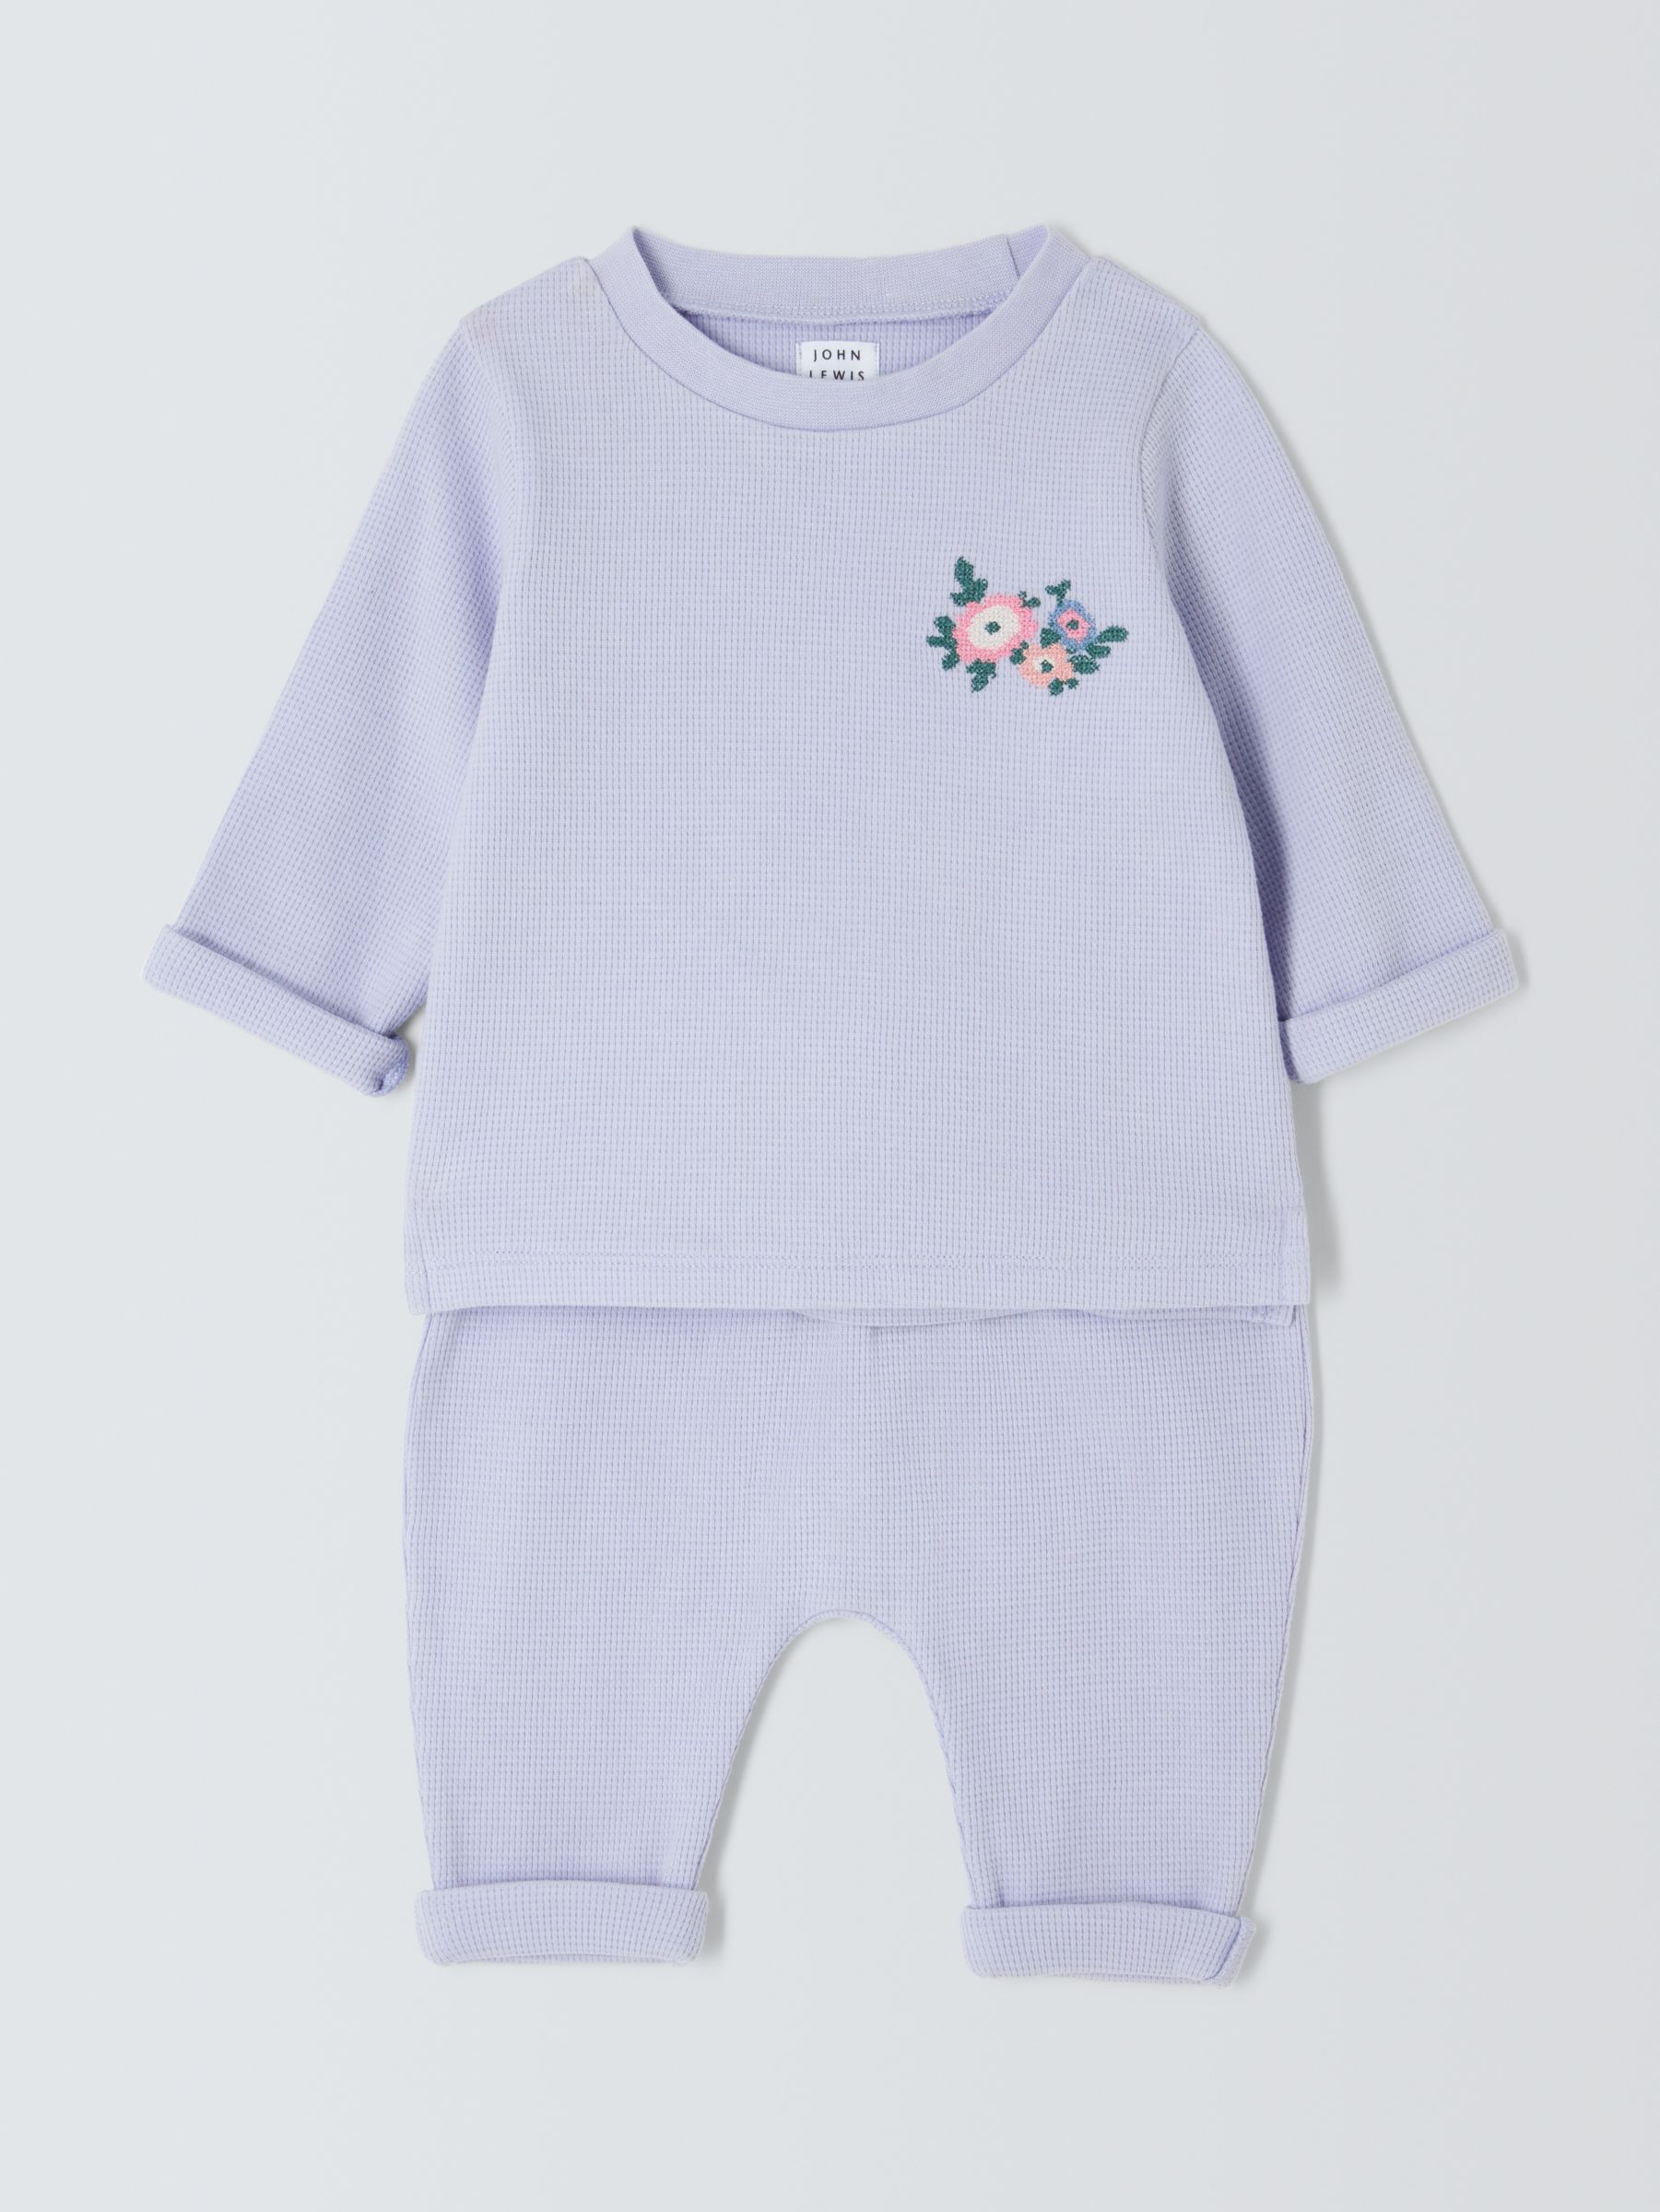 John Lewis Baby Embroided Flower Waffle Pyjamas, Purple, 18-24 months